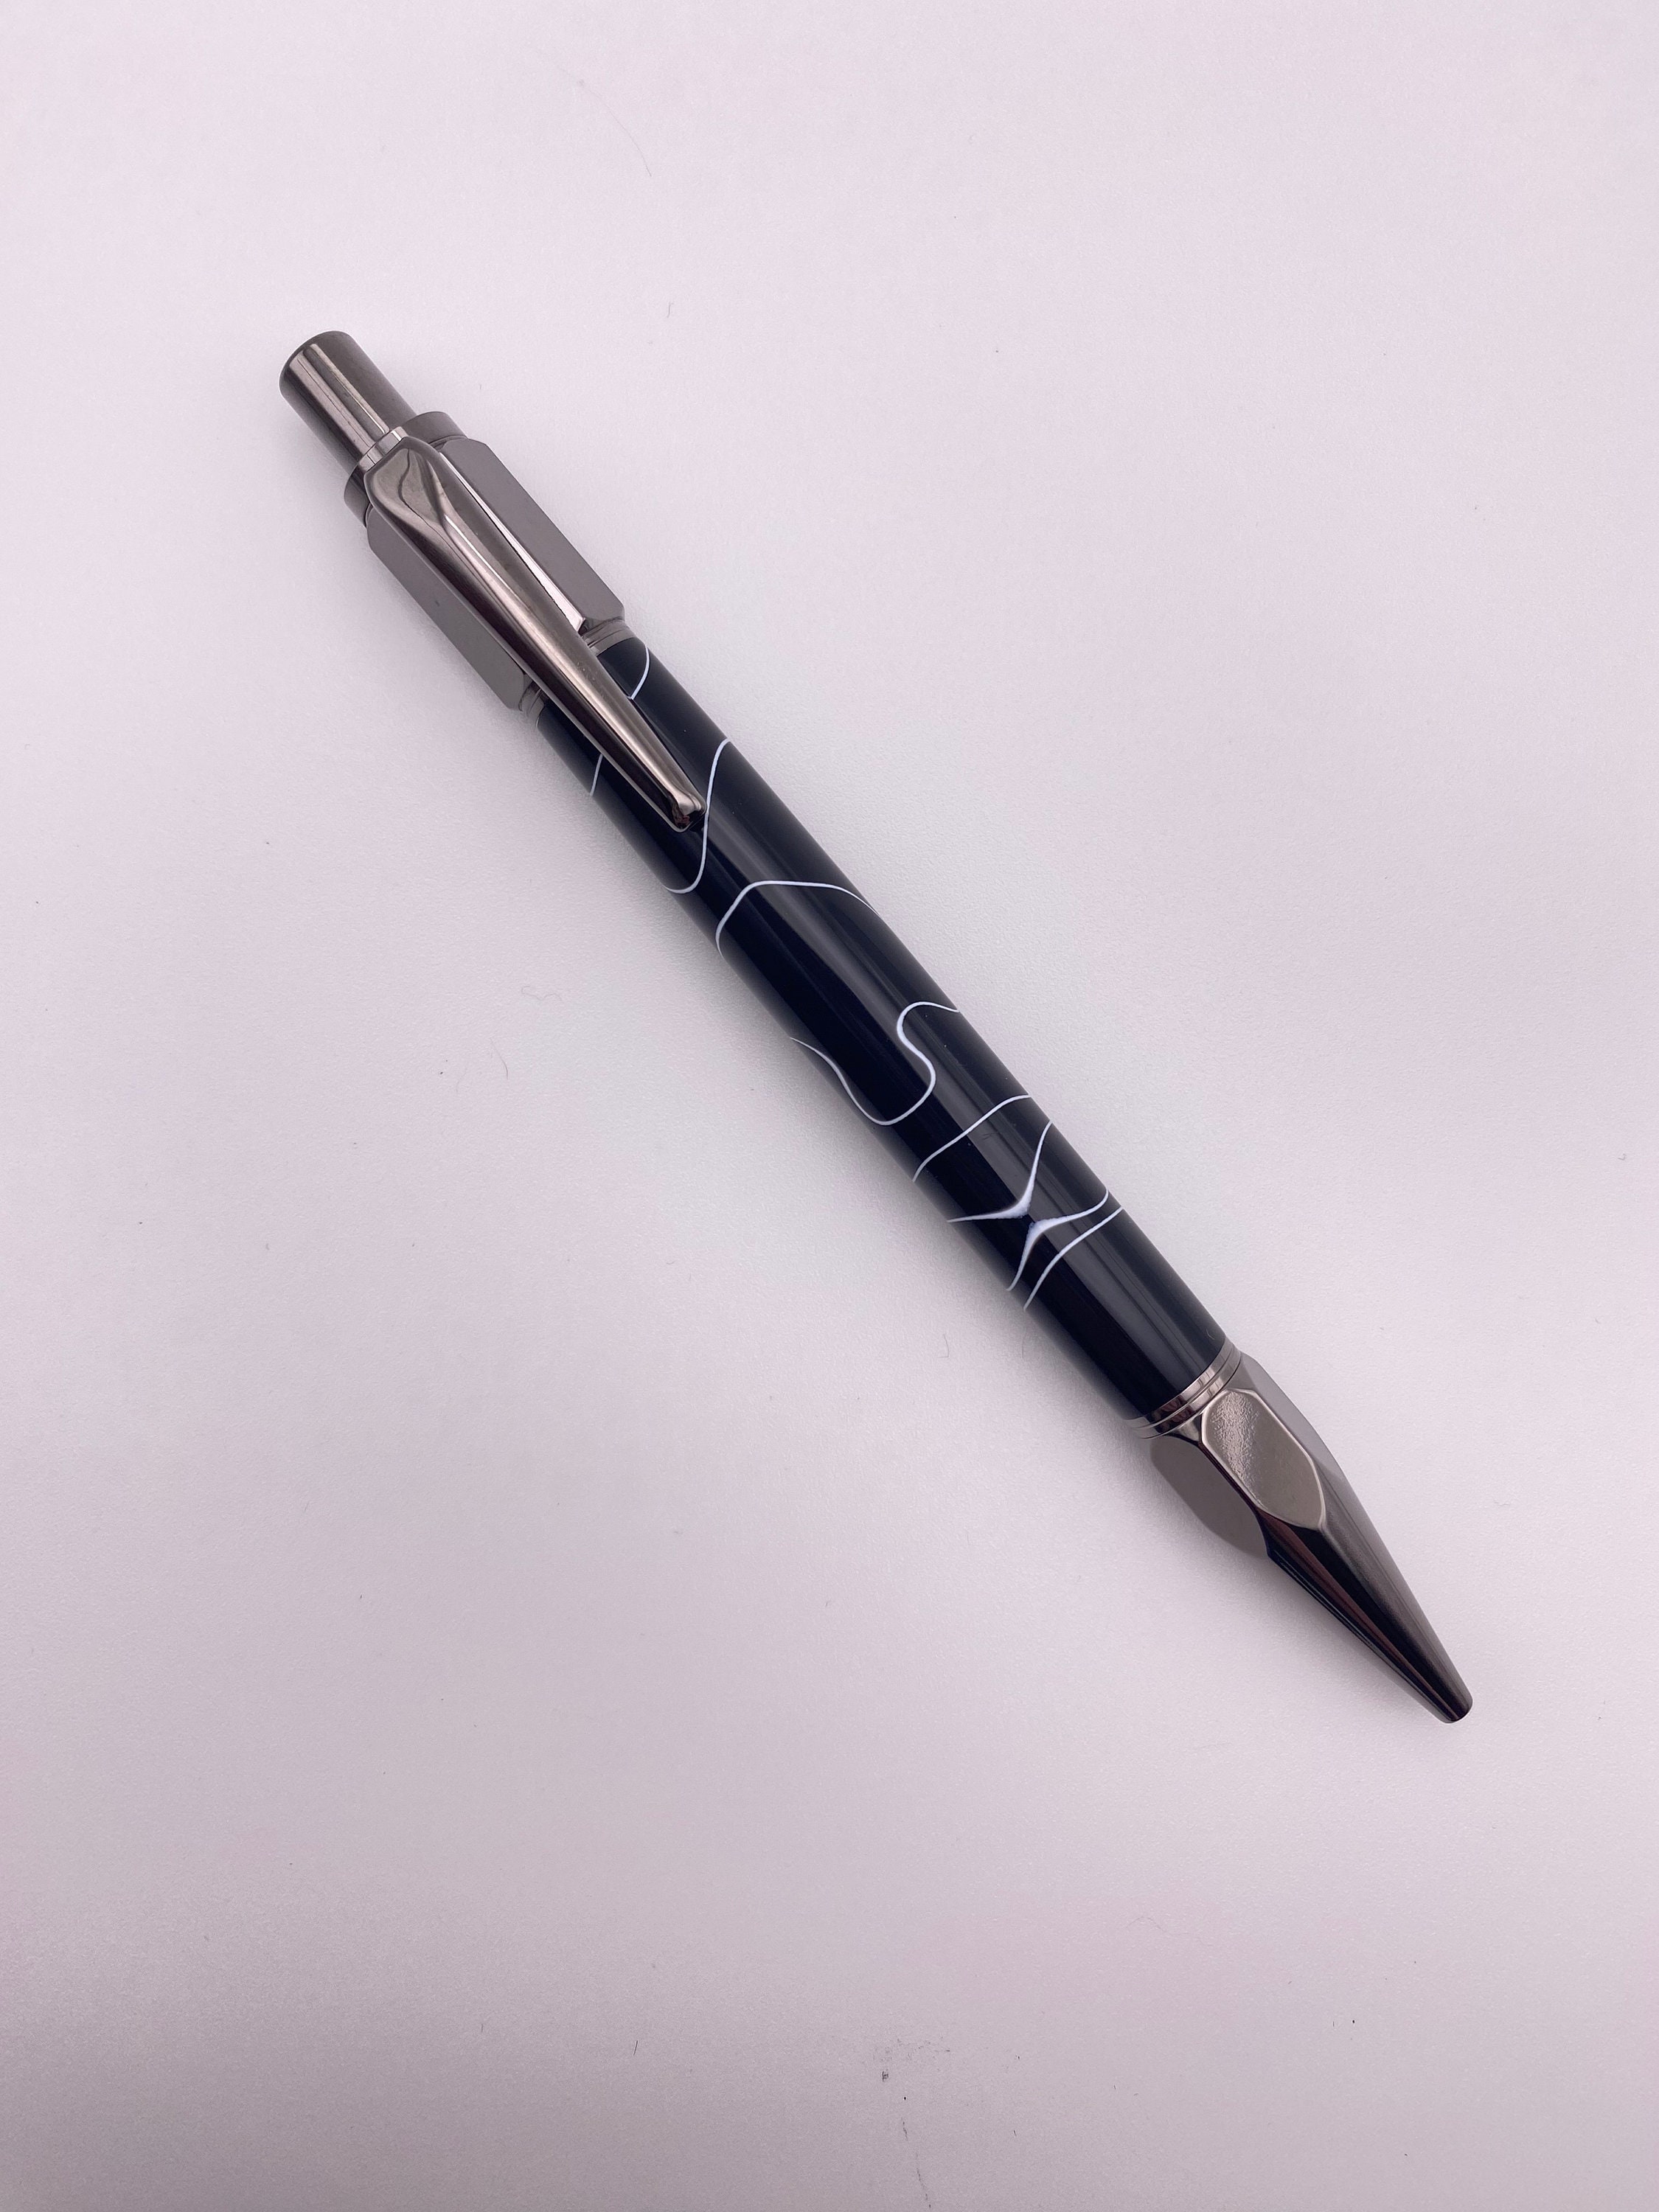 Metallic Silver Permanent PAINT MARKER Oil Based Felt Fine Tip Pen